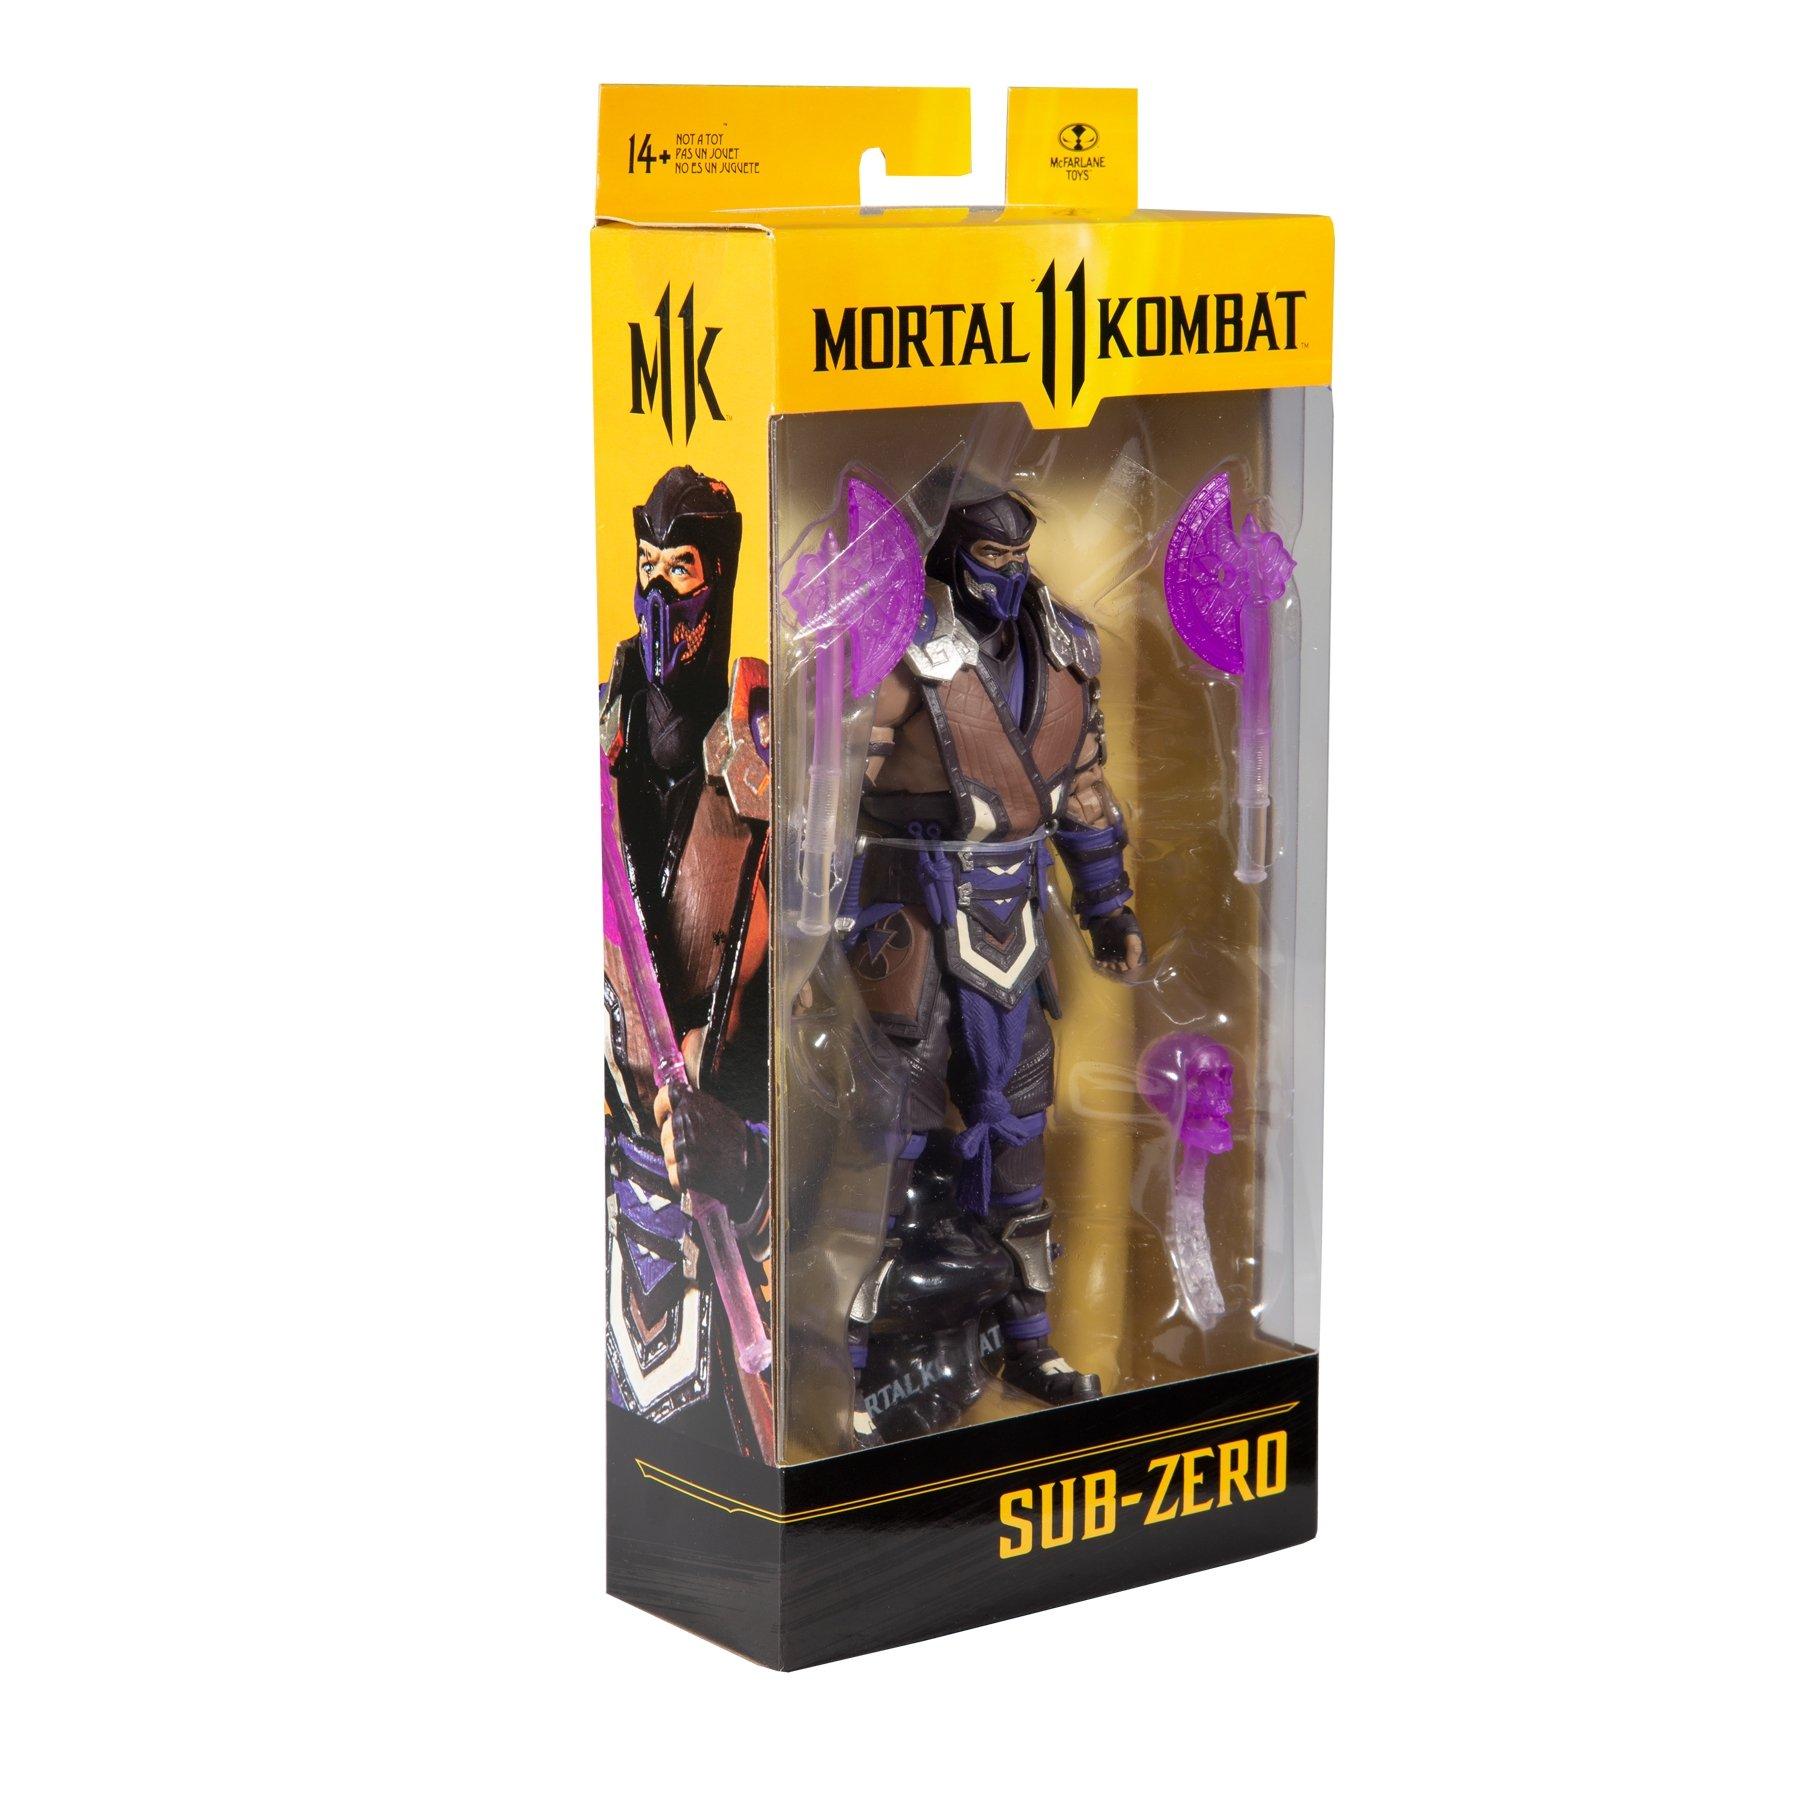 Mortal Kombat 11 Sub-Zero Action Figure (Klassic) 